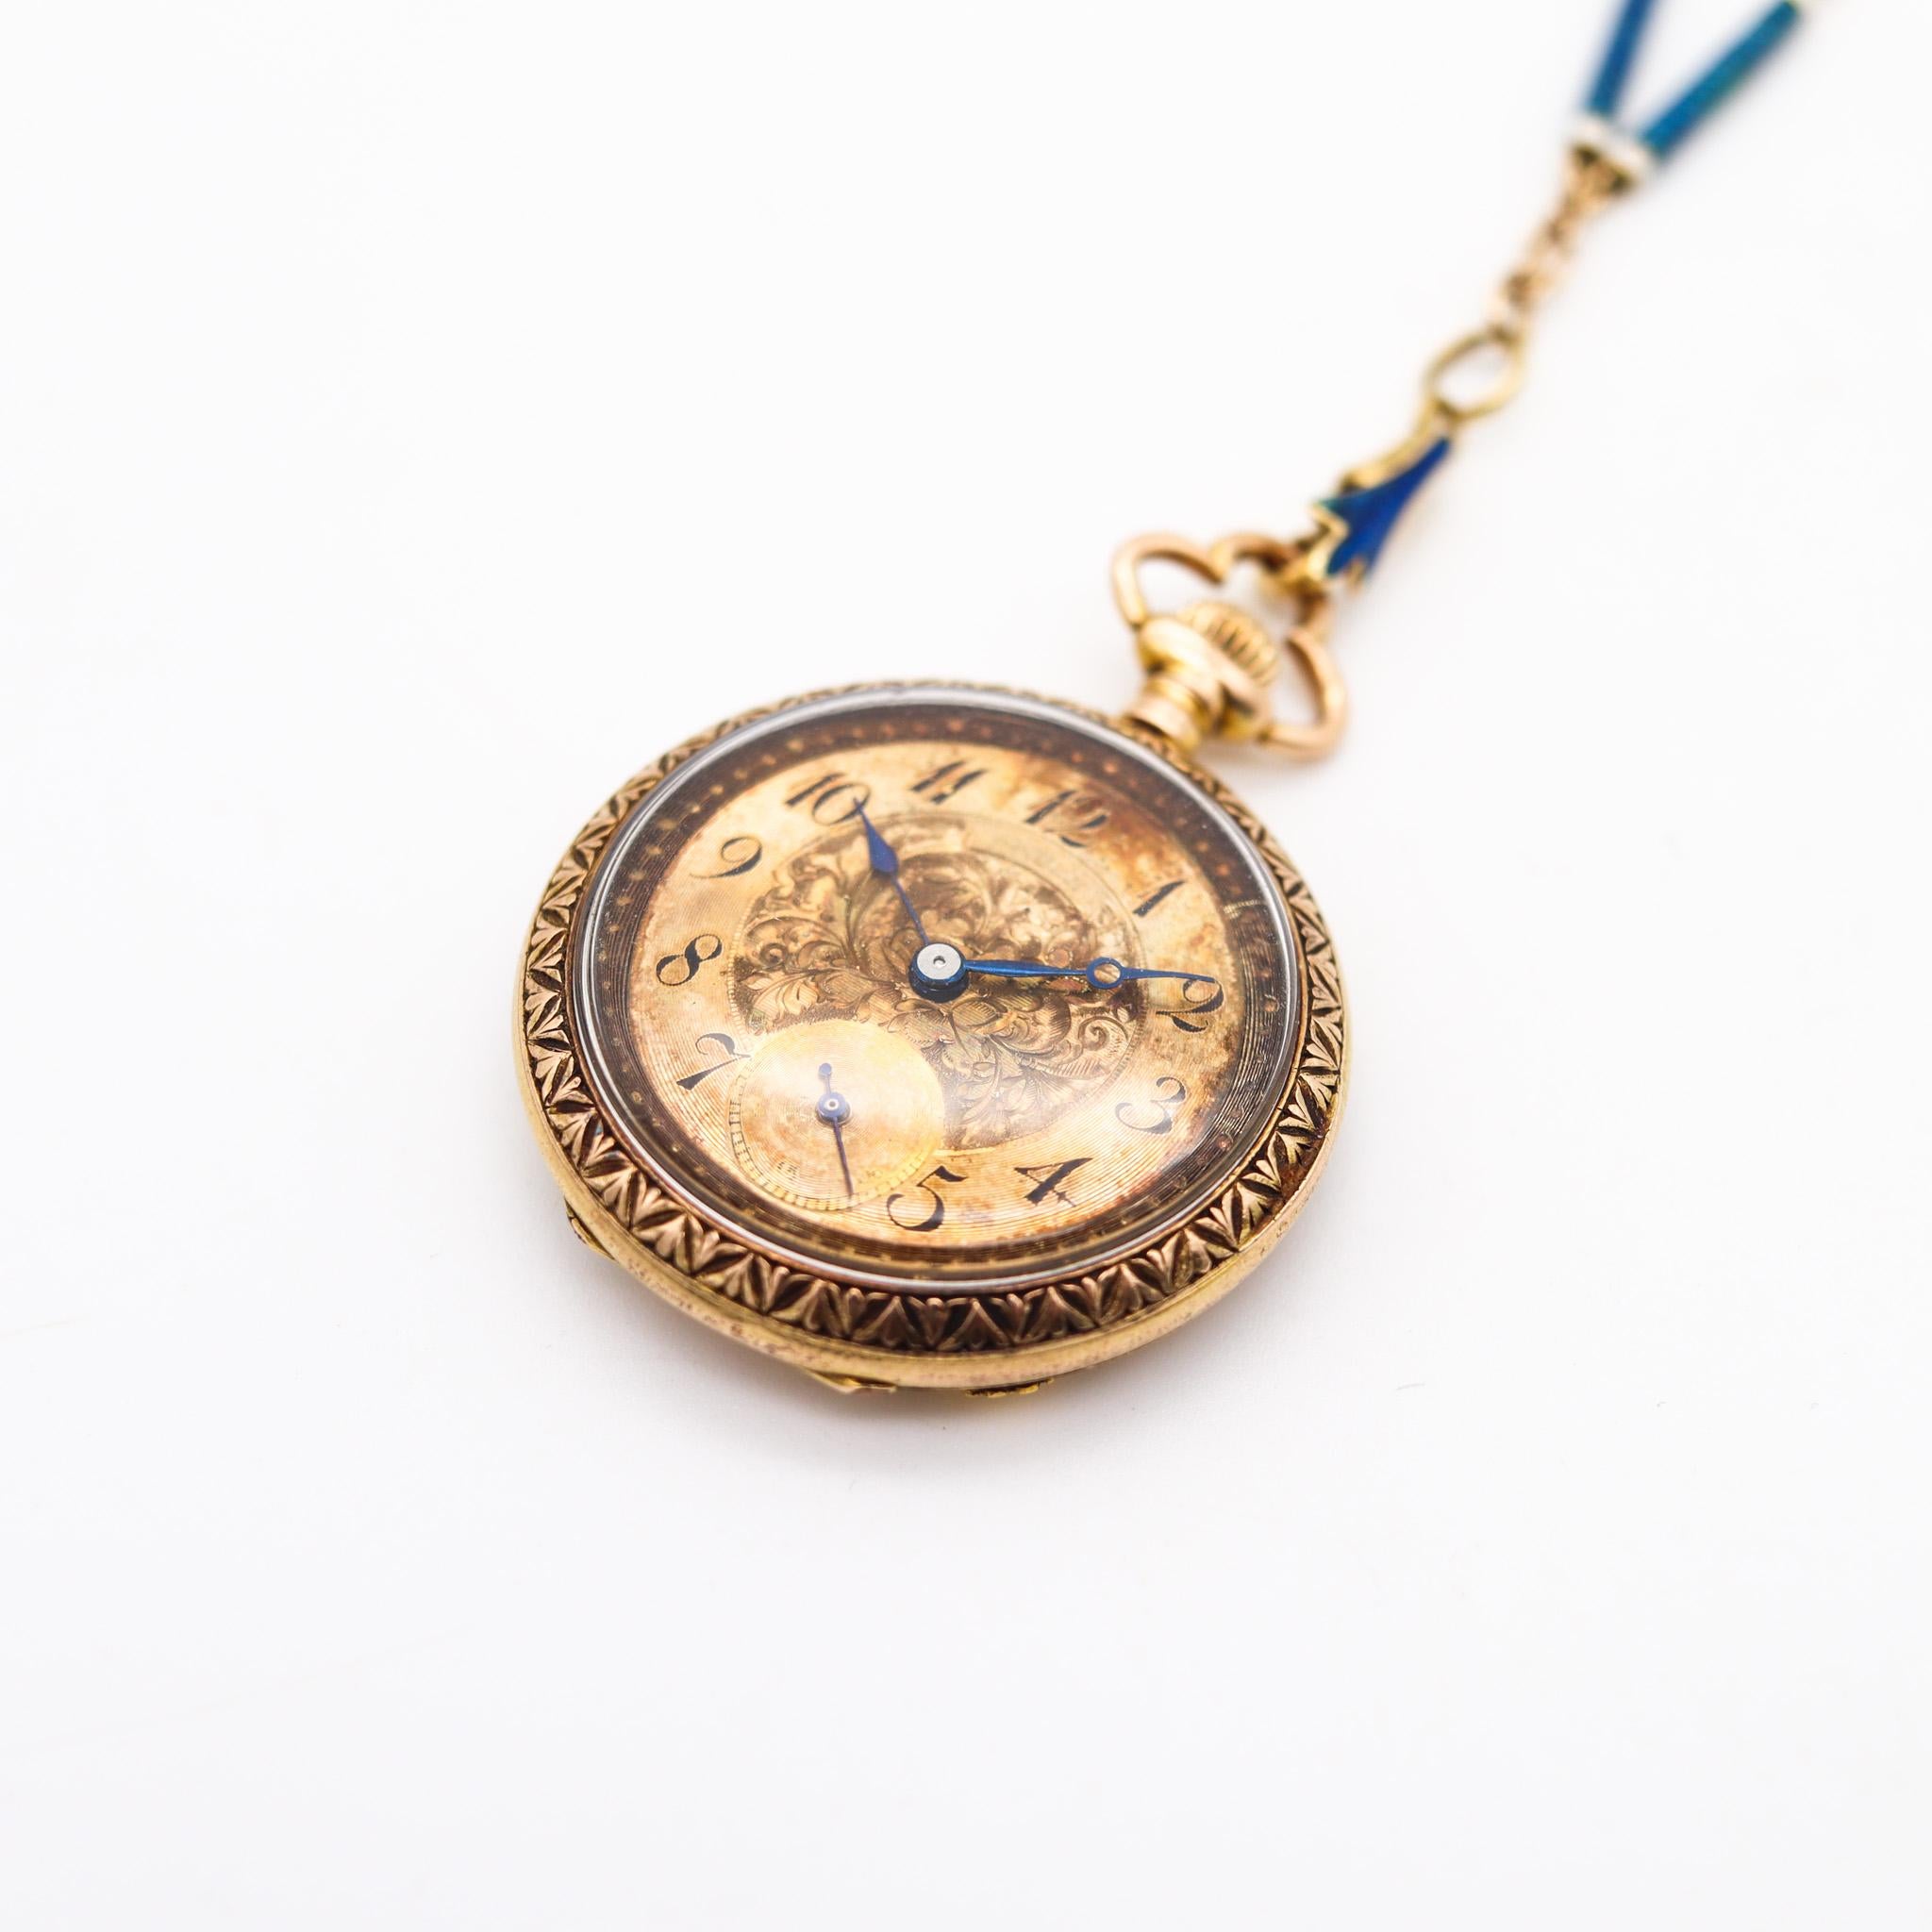 Edwardian 1903 Swiss Necklace Watch In 14Kt Gold With Guilloché Blue Enamel For Sale 1